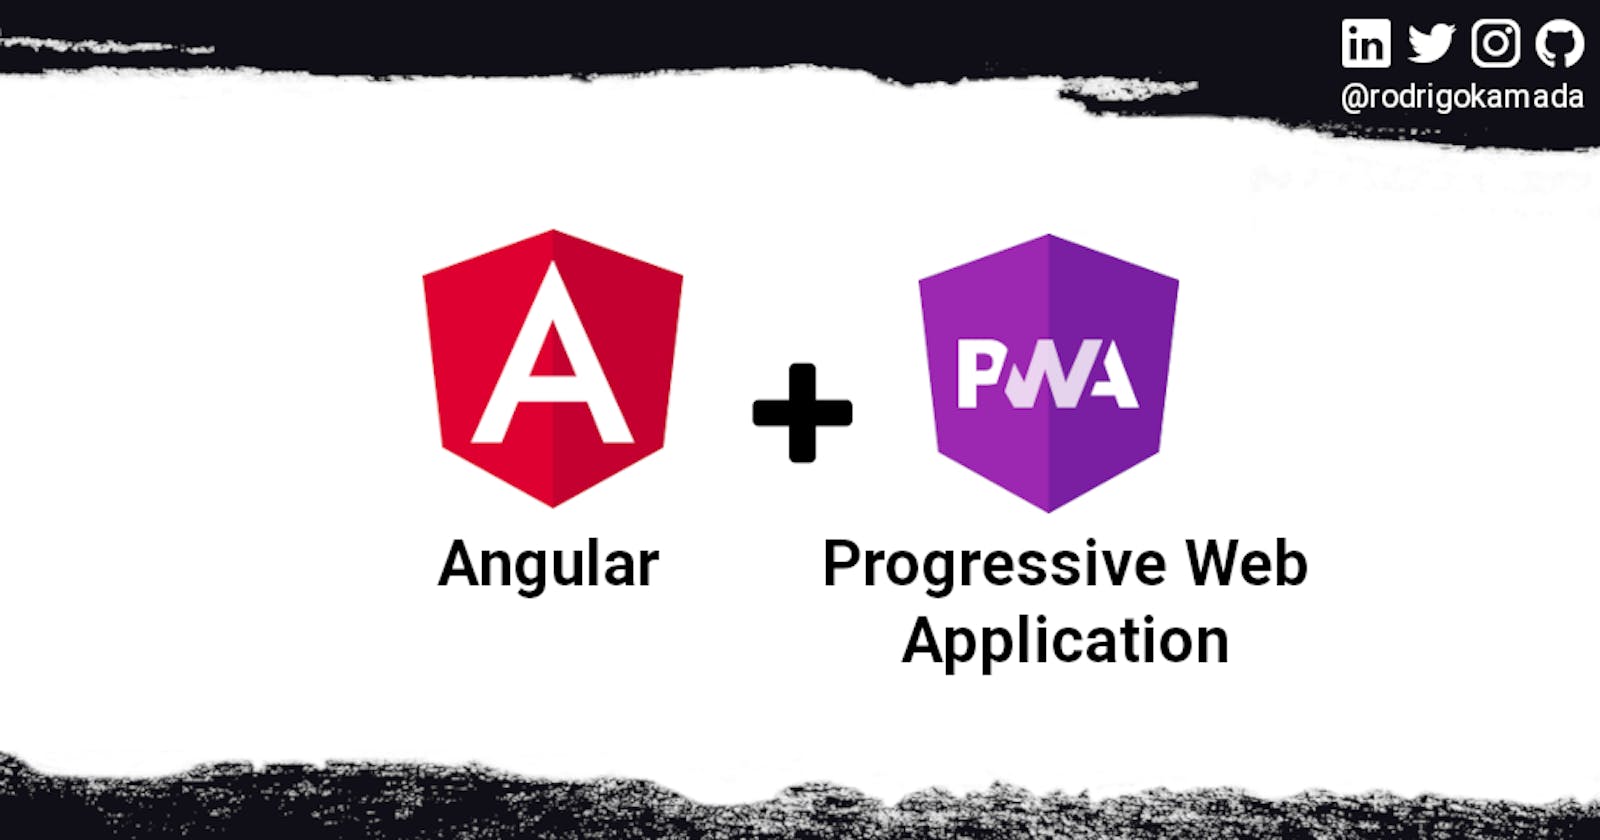 Adding the Progressive Web Application (PWA) to an Angular application